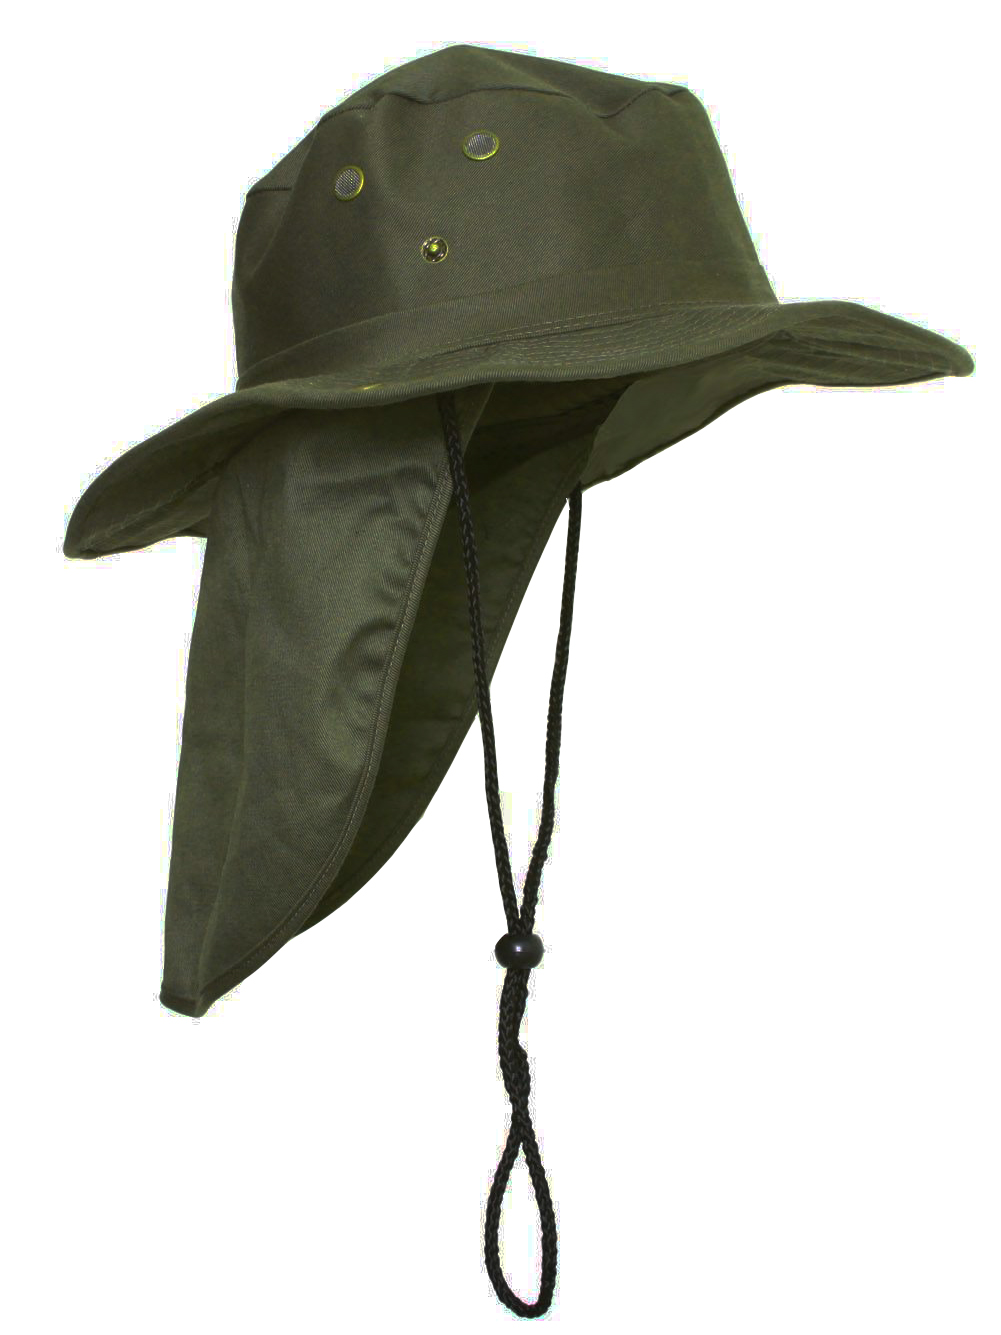 Top Headwear Safari Explorer Bucket Hat With Flap Neck Cover - Olive, Medium - image 1 of 1